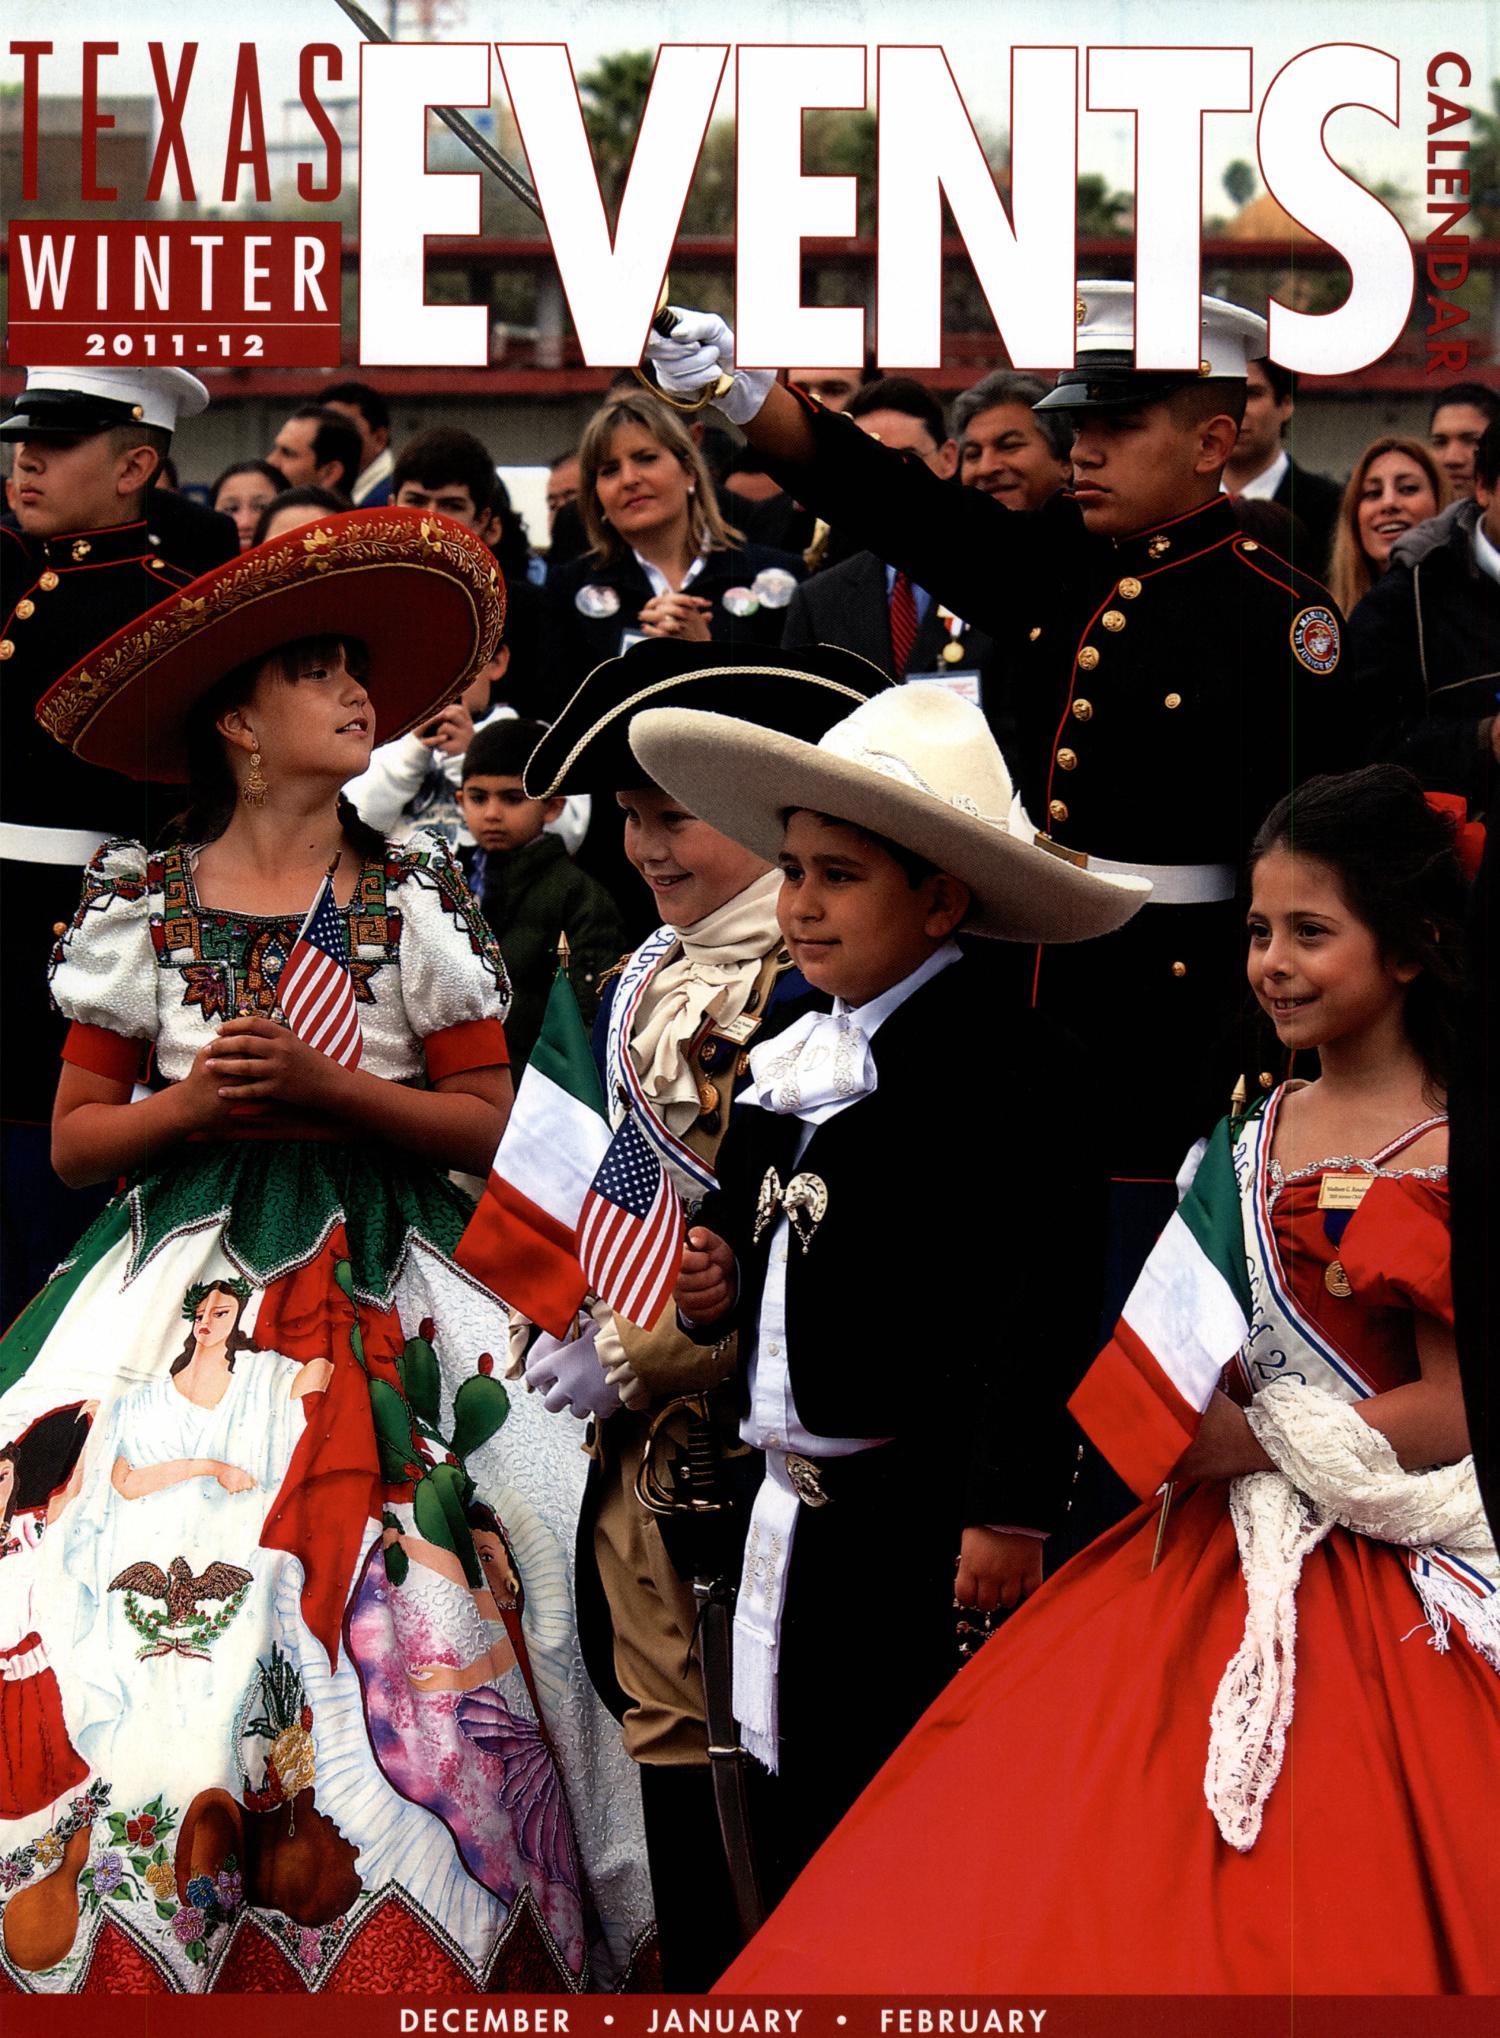 Texas Events Calendar, Winter 2011-2012
                                                
                                                    Front Cover
                                                